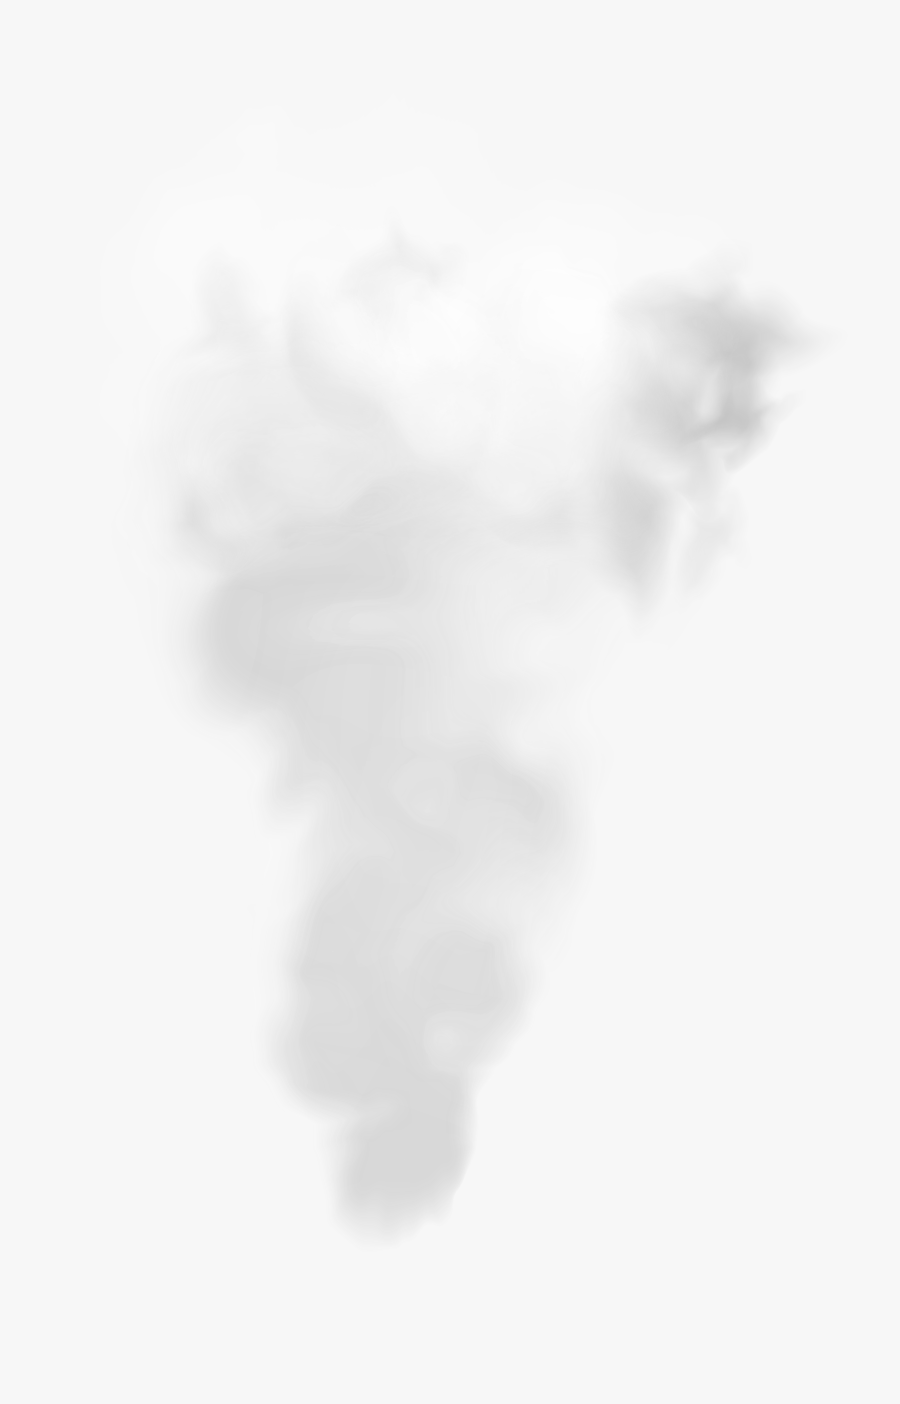 Transparent Rocket Smoke Png - Dhua Png, Transparent Clipart